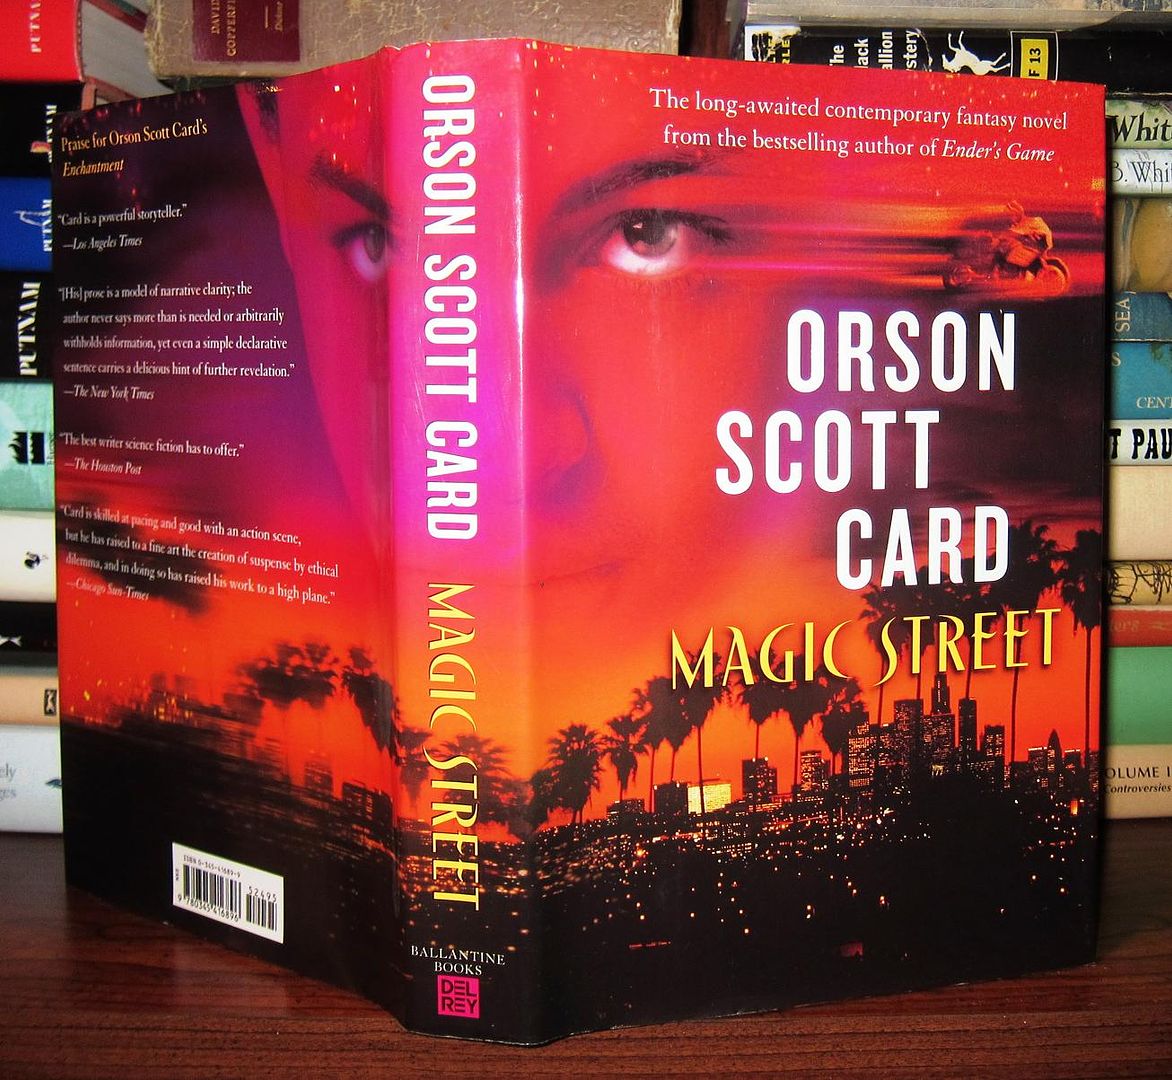 CARD, ORSON SCOTT - Magic Street